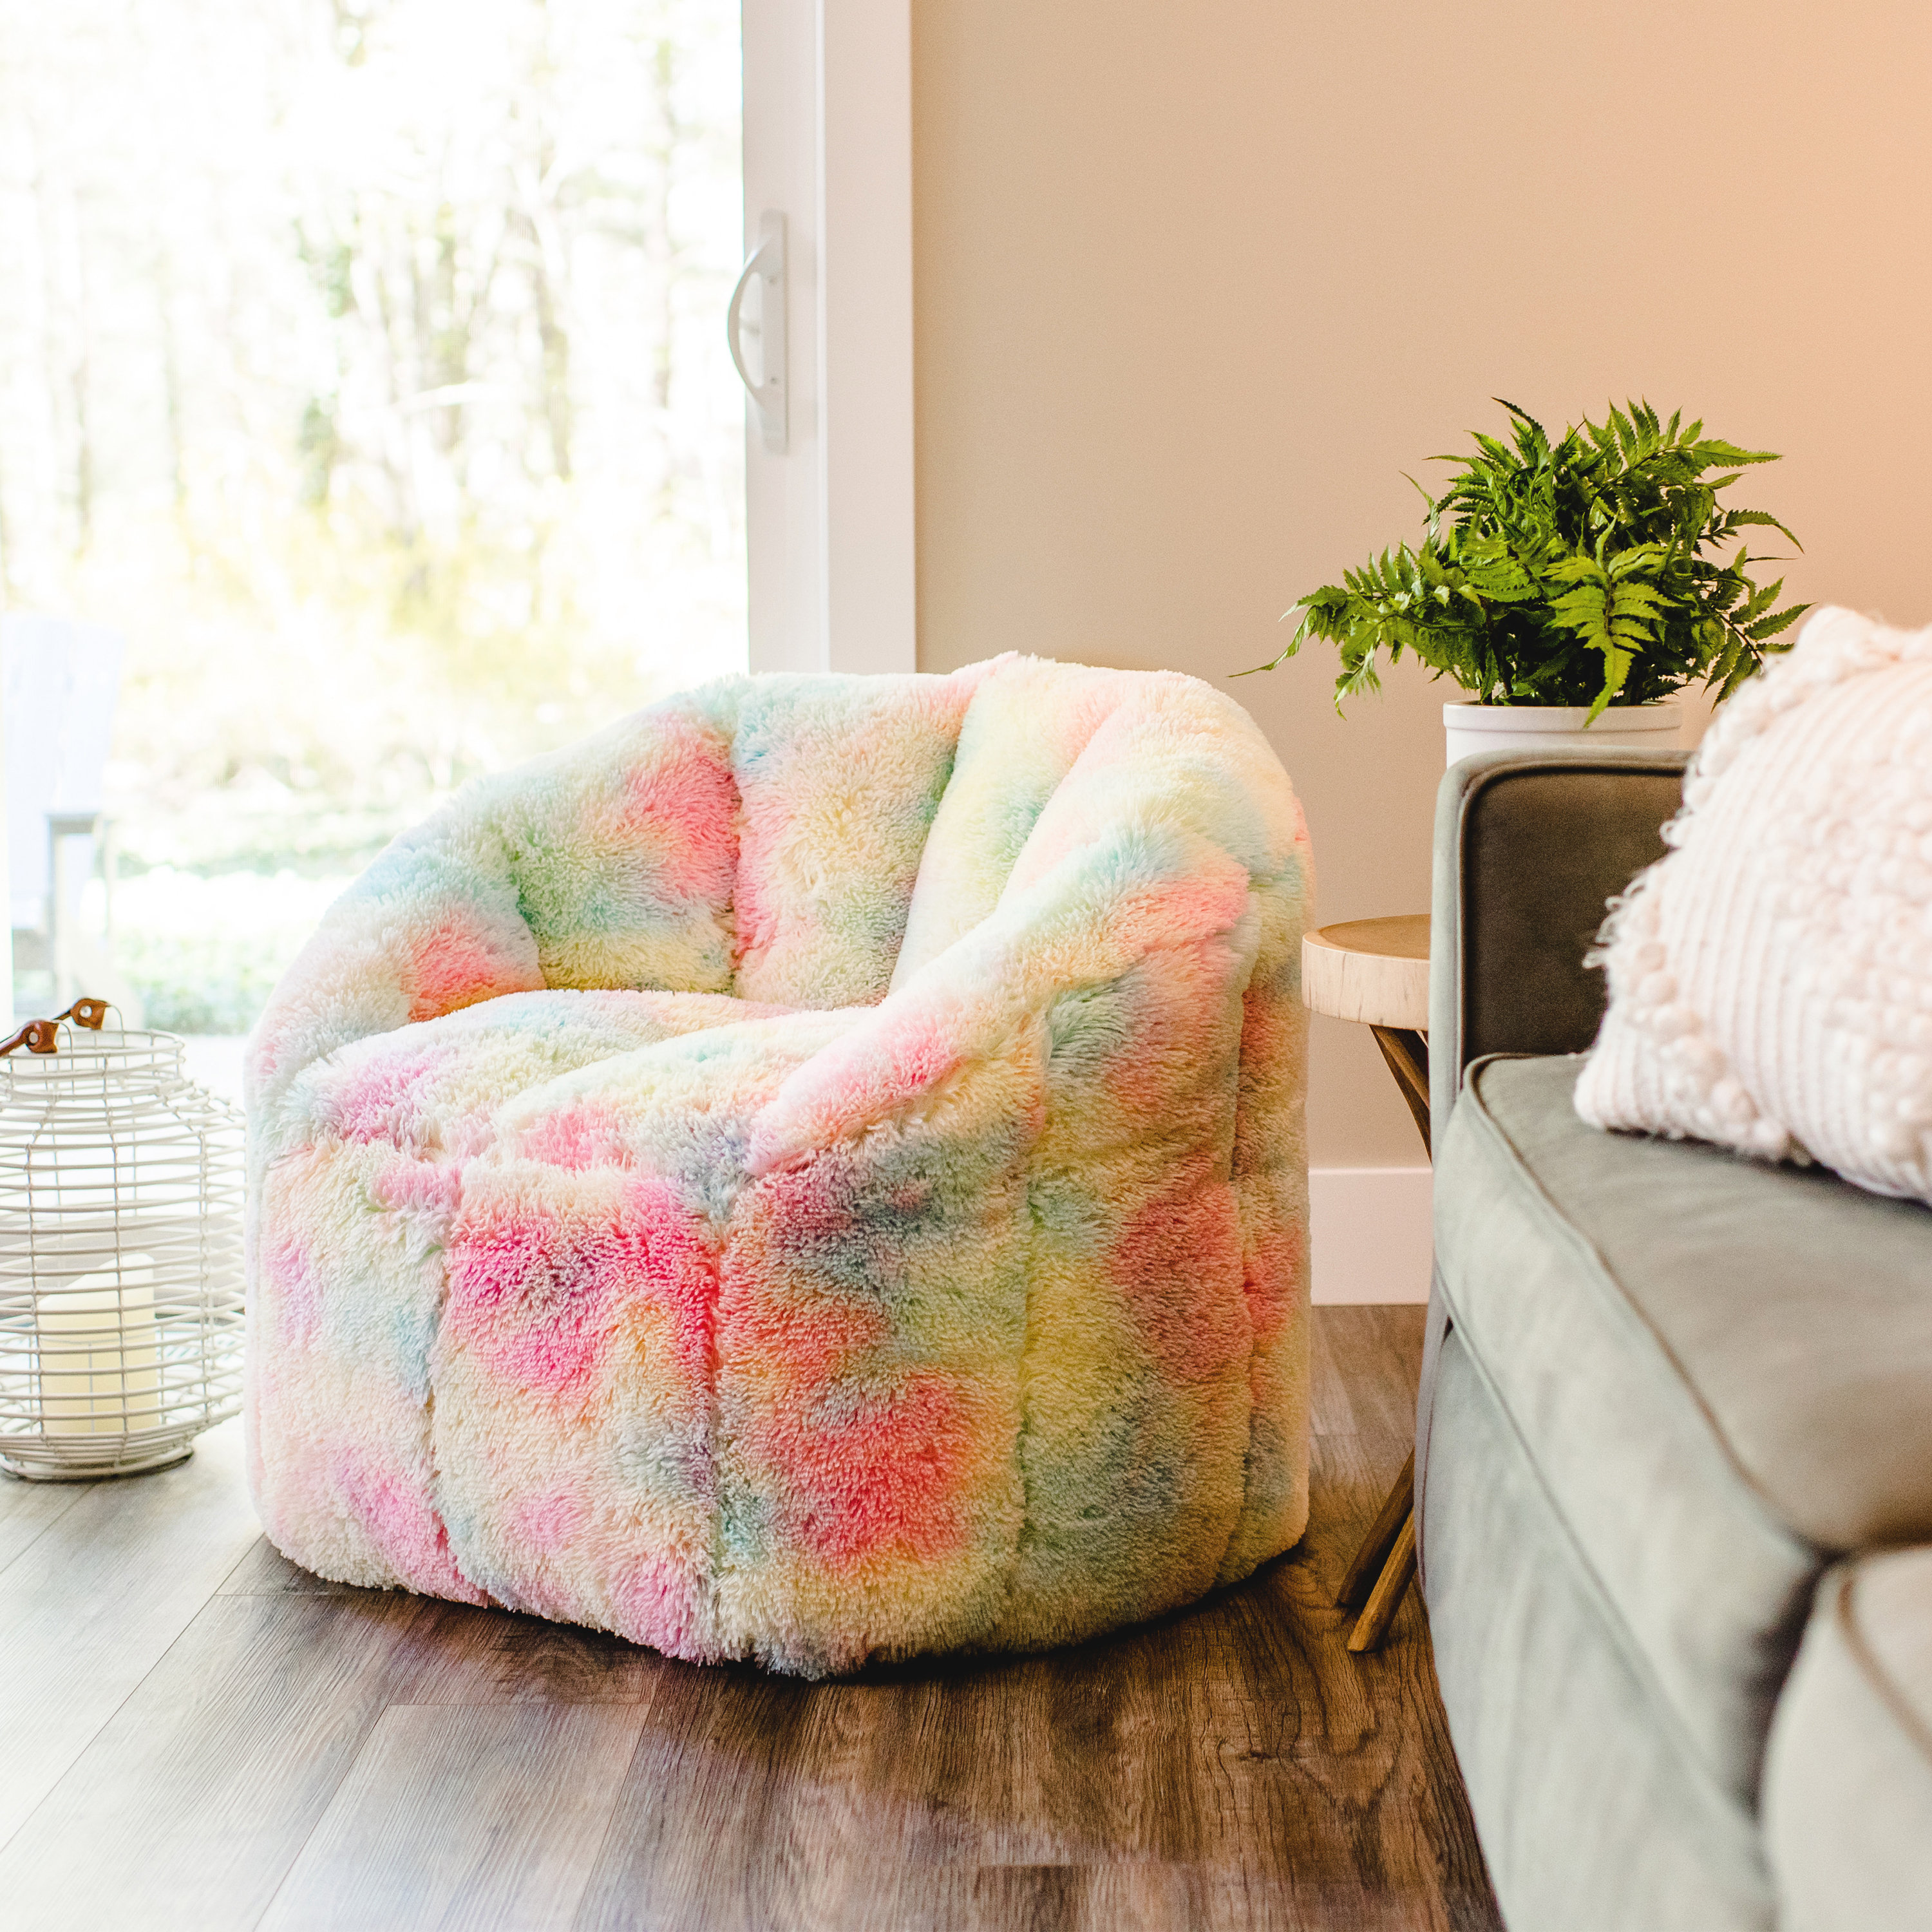 Buy Bean Chair Online | Bean Bag Chairs For Kids – Peekaboo Patterns